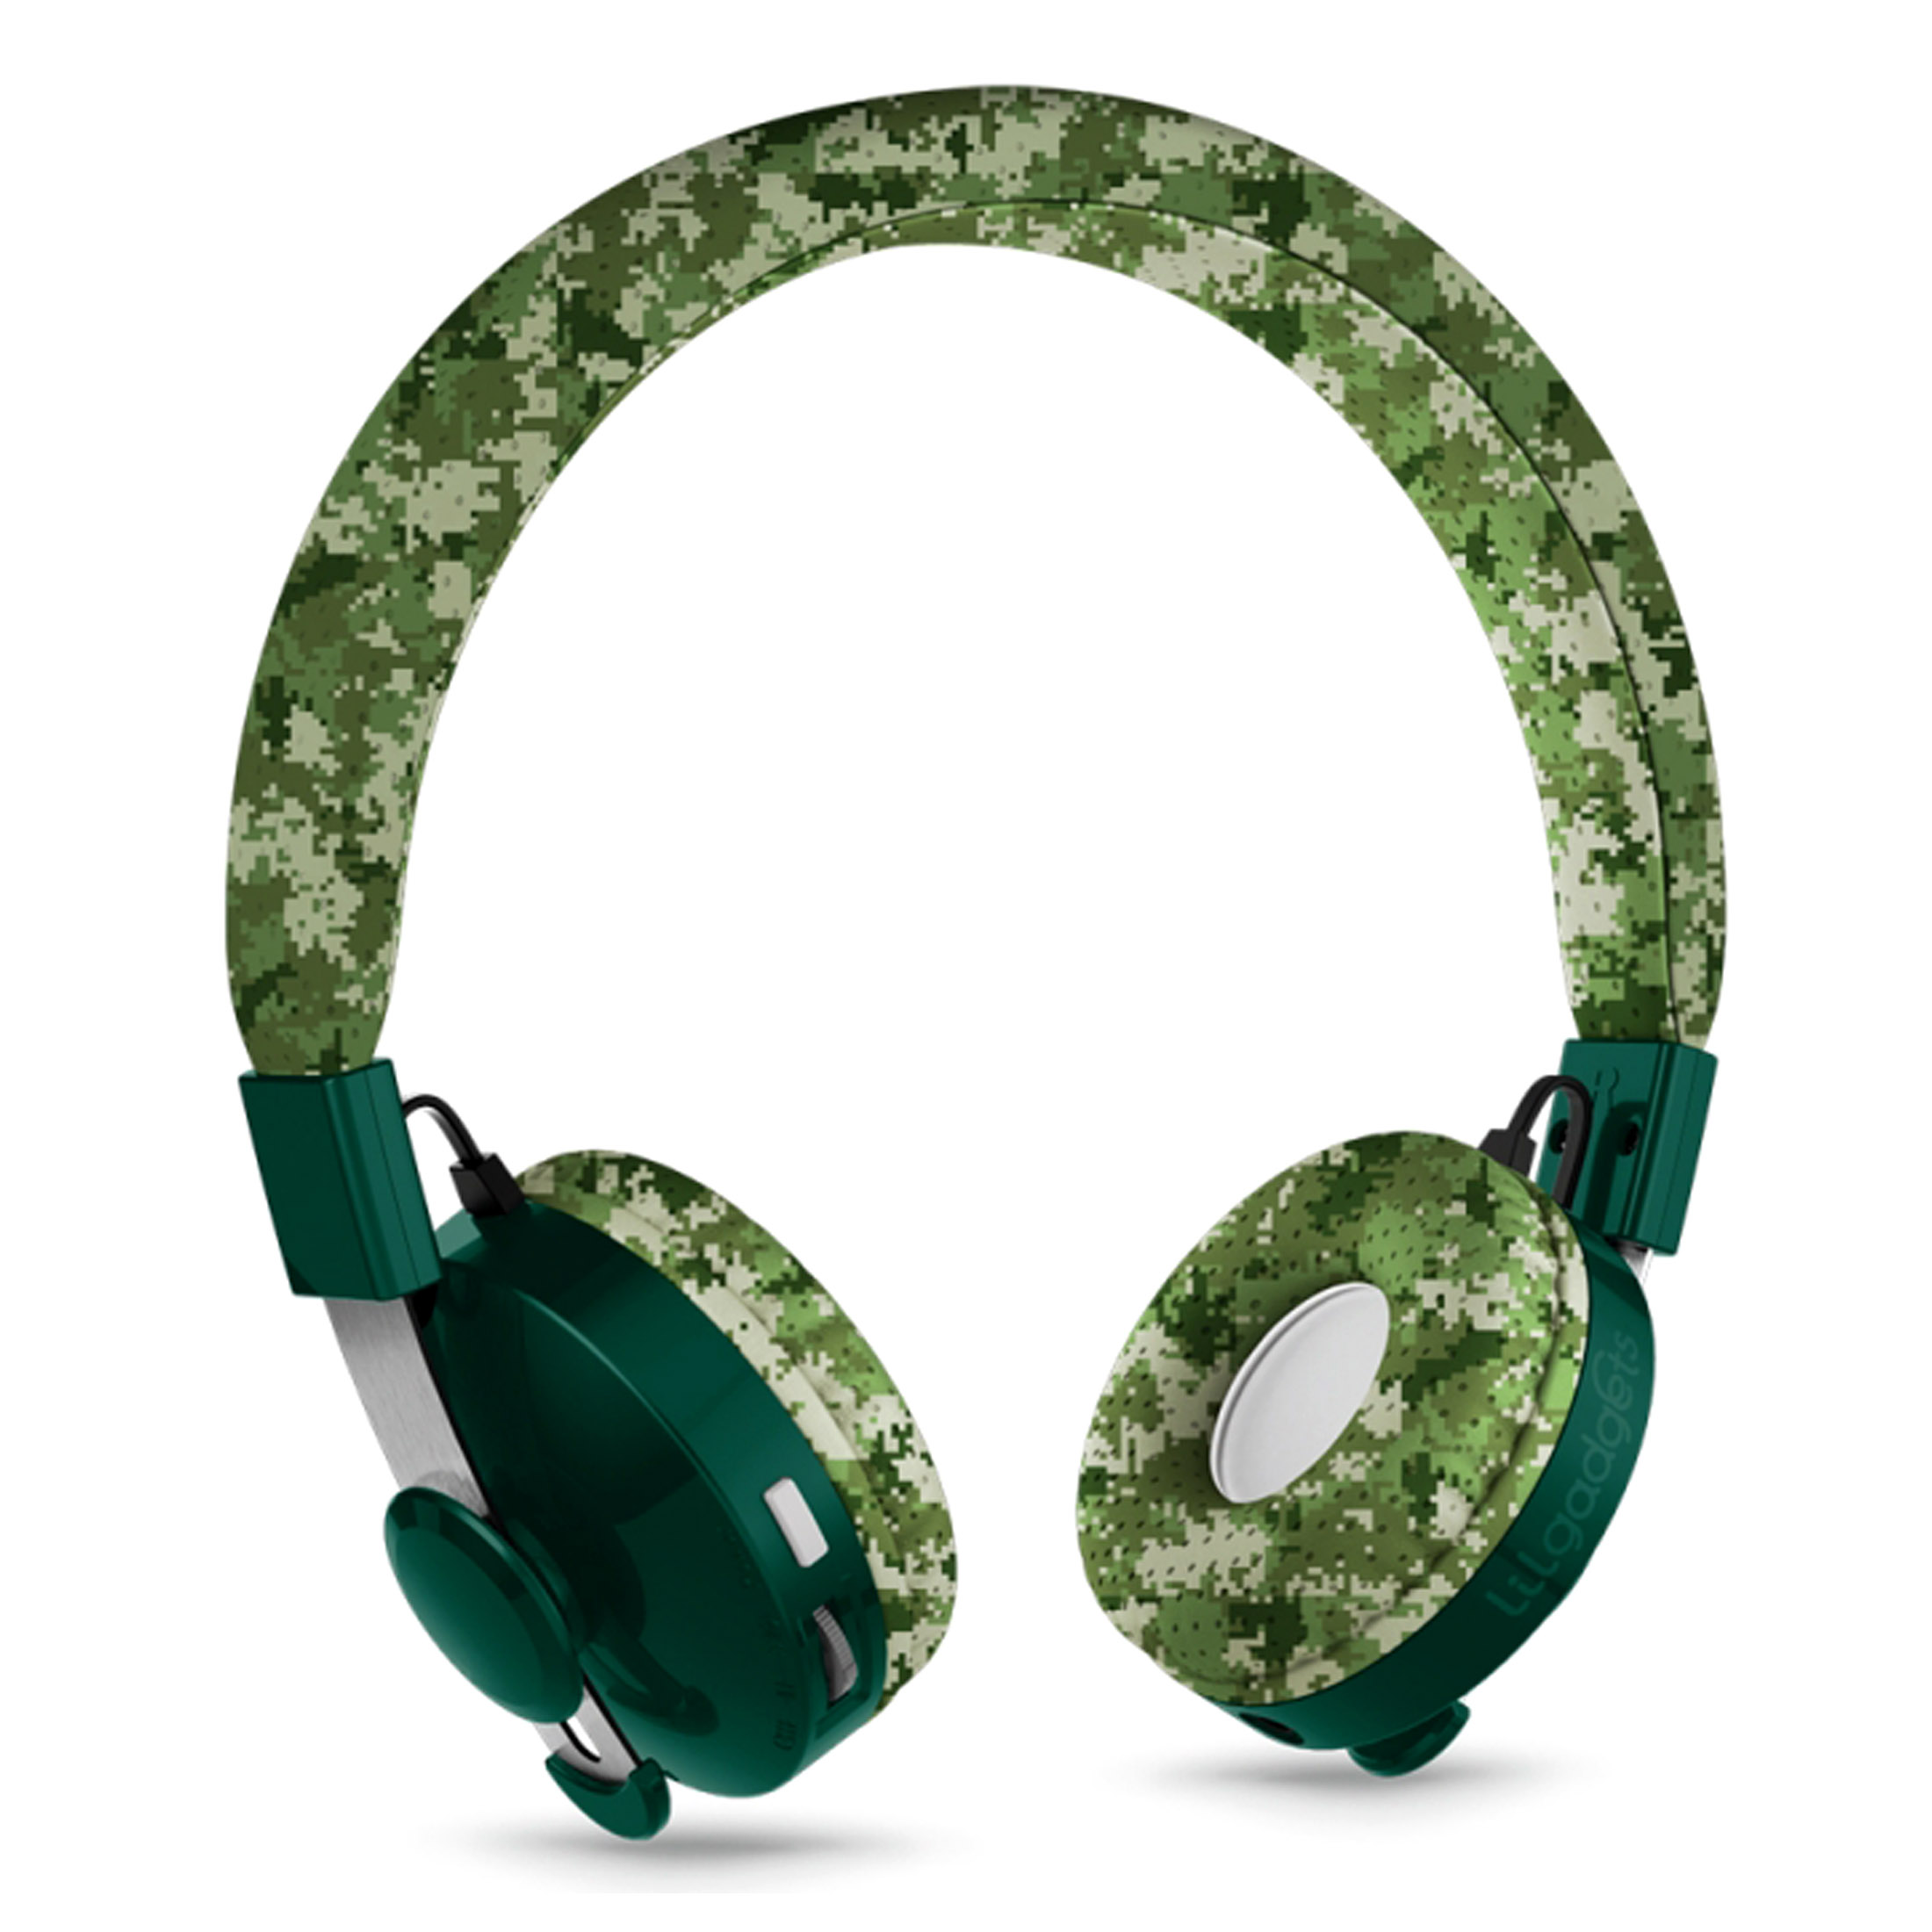 LilGadgets Untangled Pro Premium Children’s Wireless Headphones – Green Digital Camo